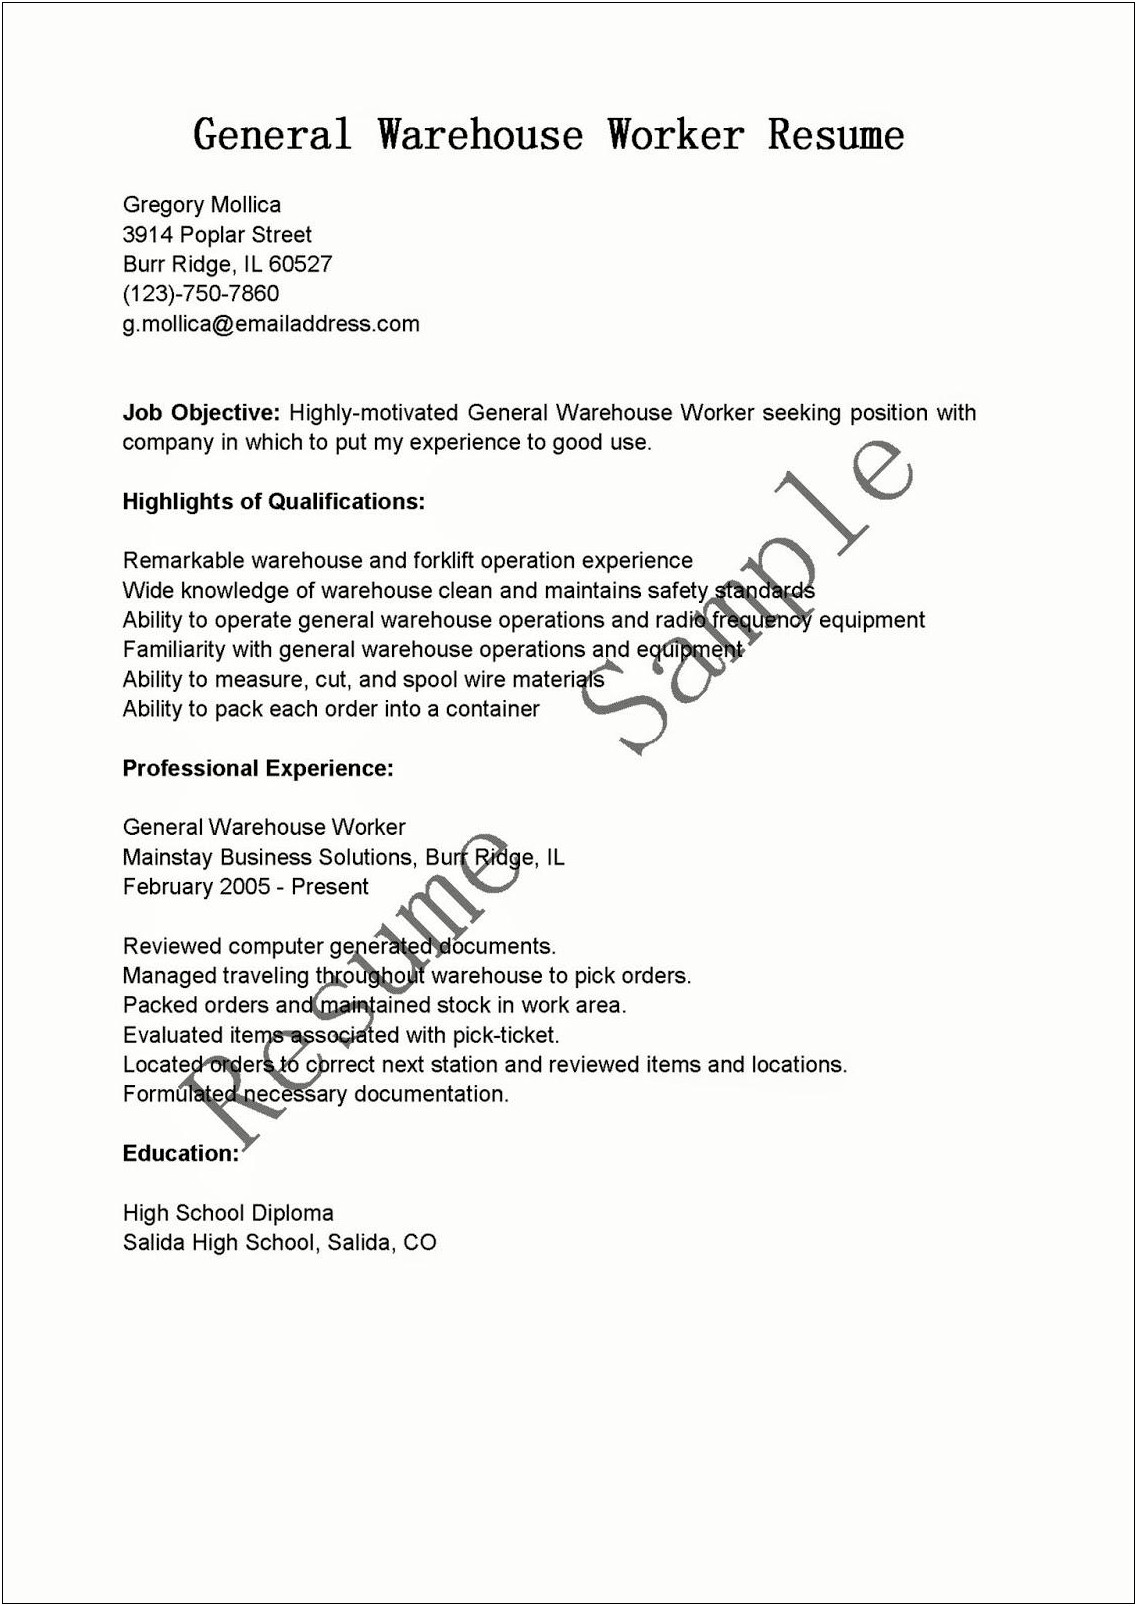 Resume For Entry Level Warehouse Jobs